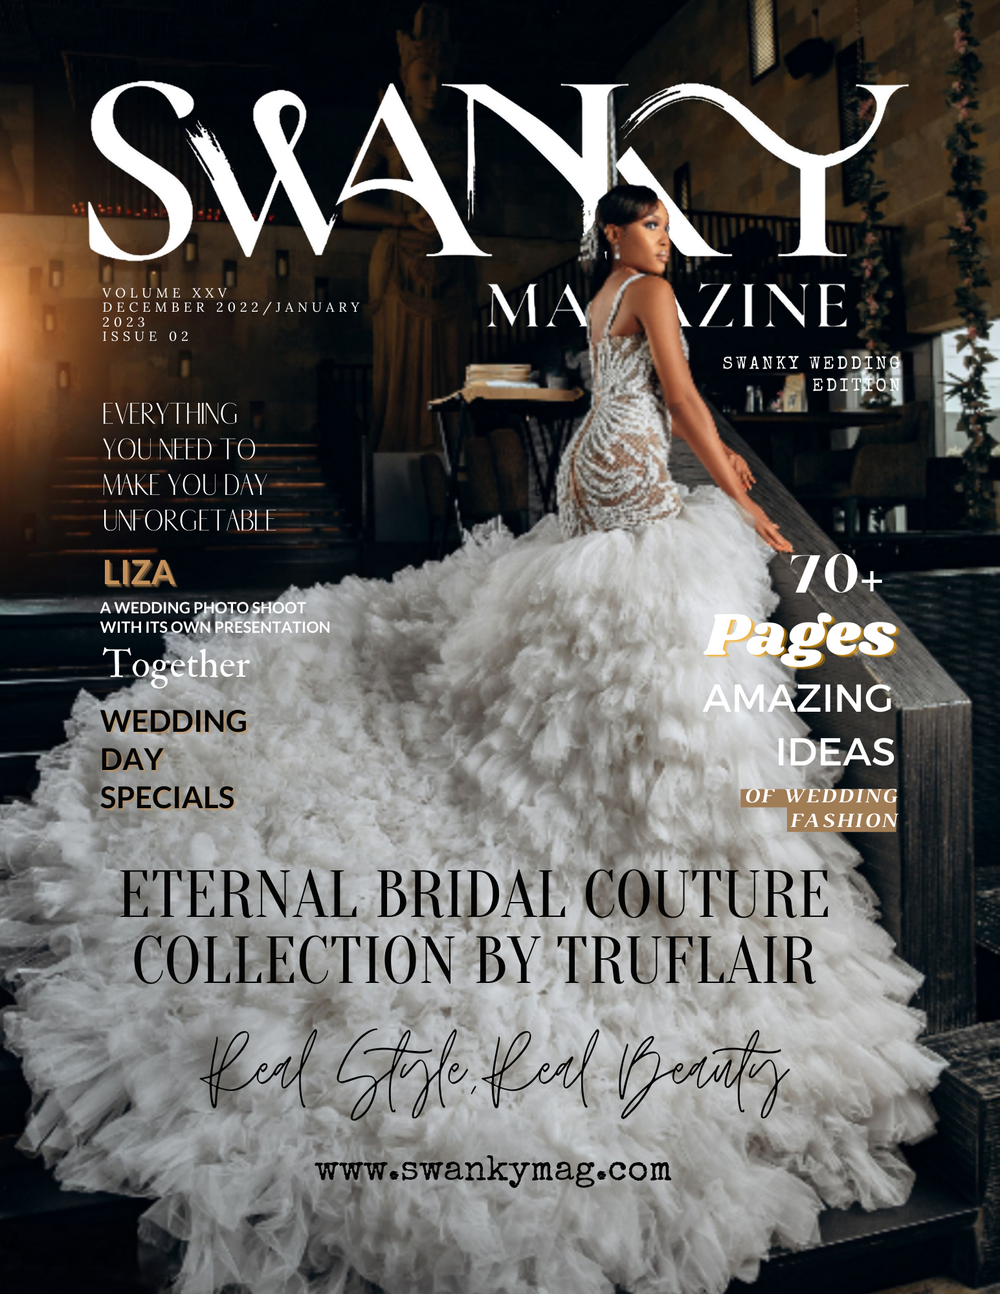 Swanky Wedding Editions Dec/Jan 2022/2023 VOL XXV Issue 02 - PRINT ISSUE